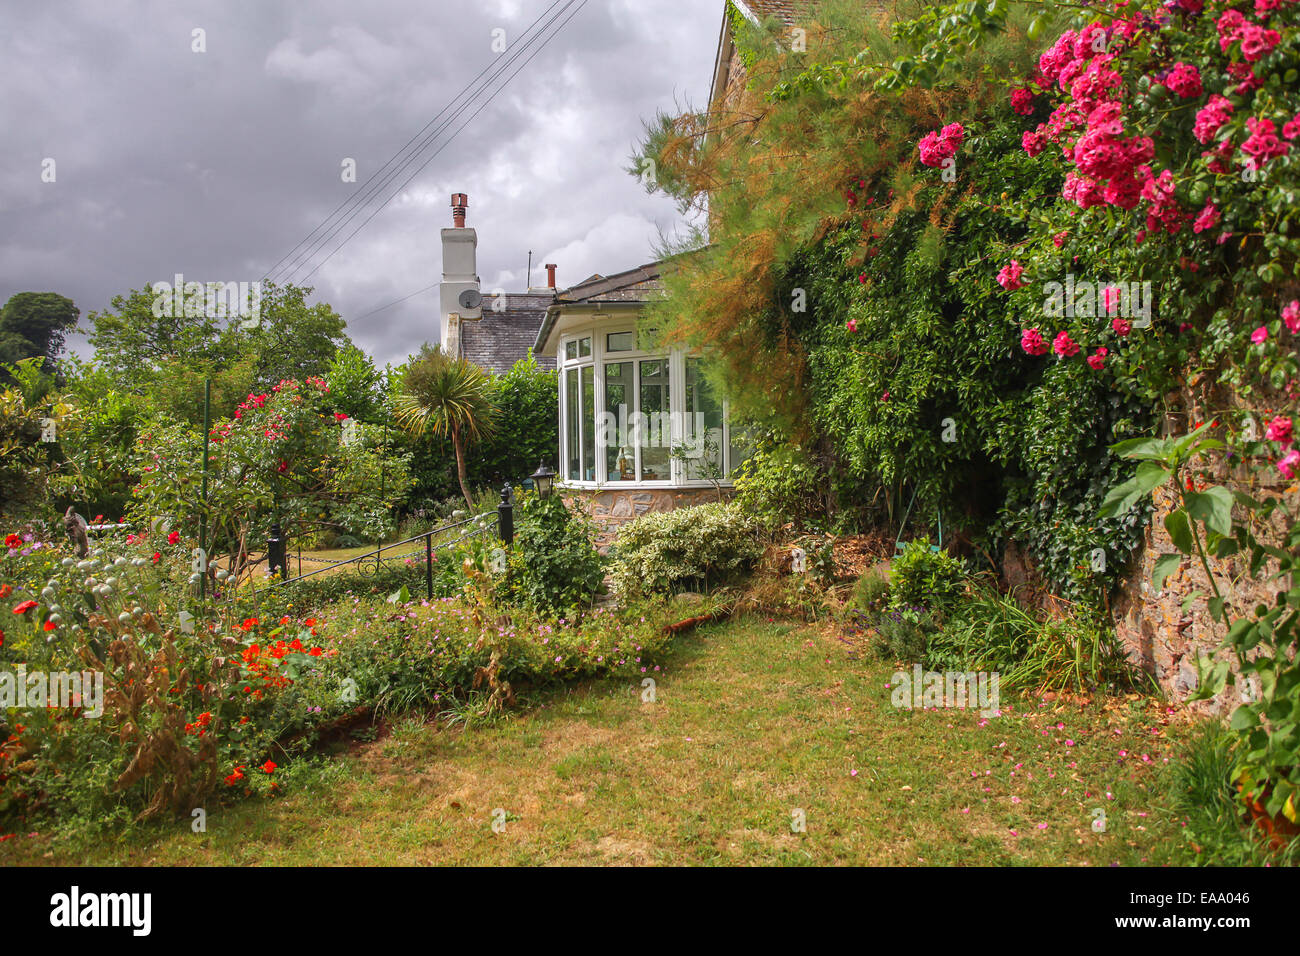 Cottage With Rose Garden In A British Village Stock Photo